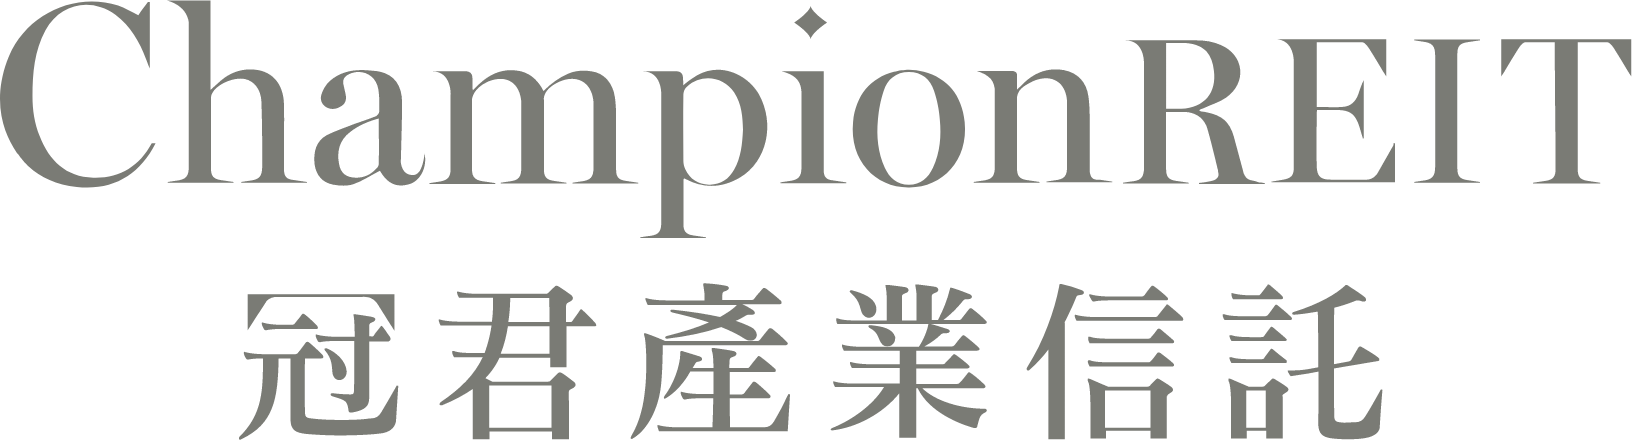 Champion REIT
 logo large (transparent PNG)